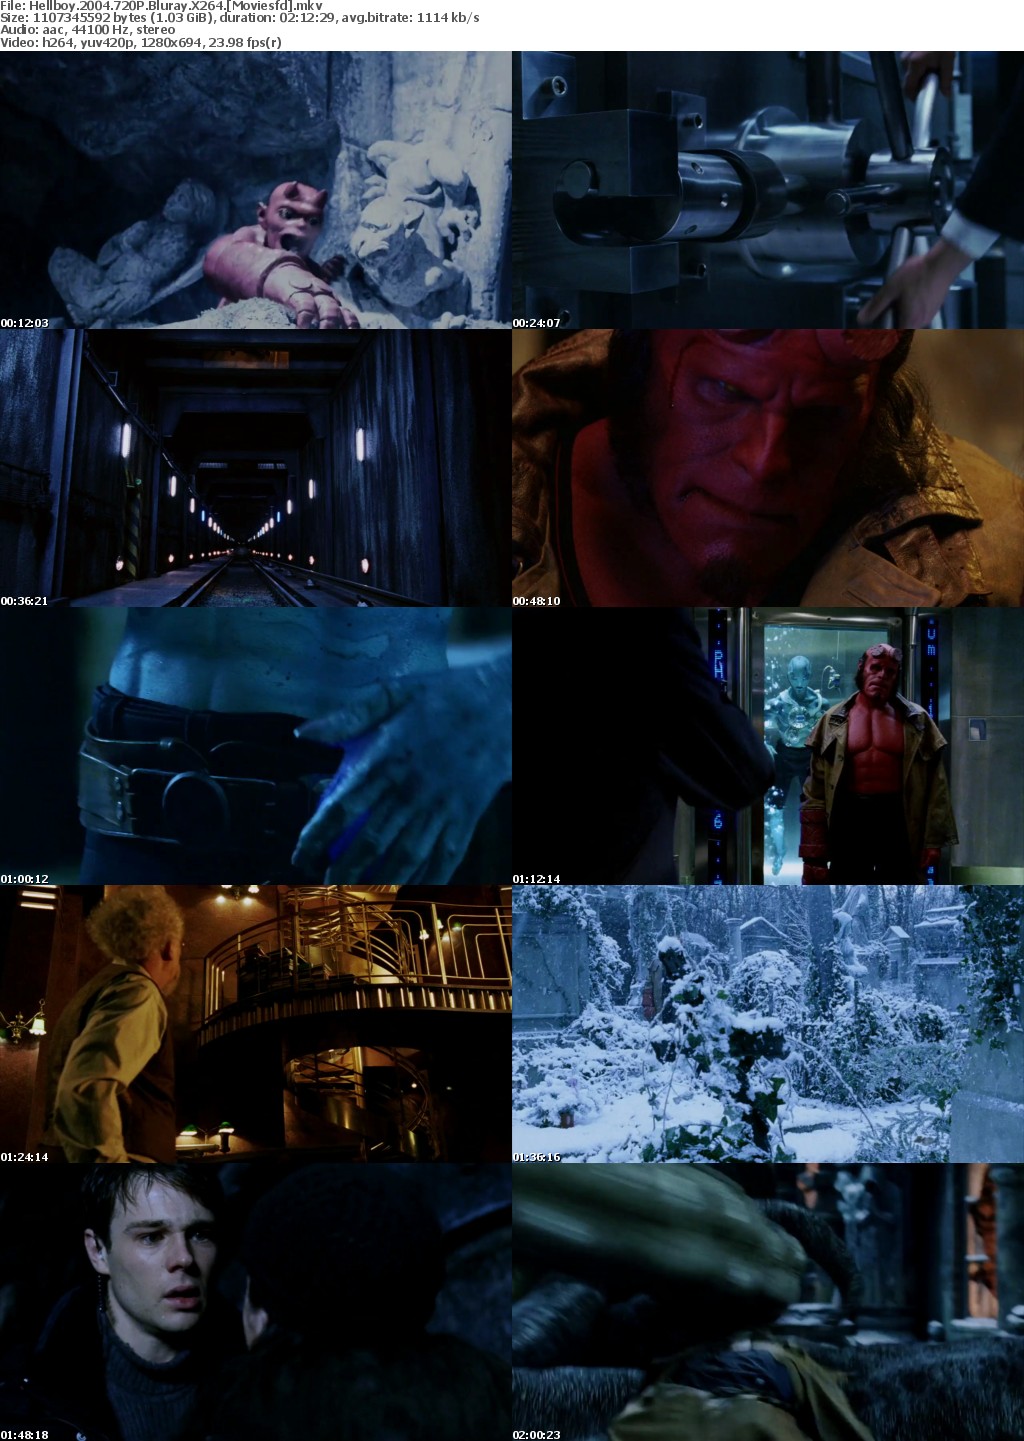 Hellboy (2004) 720p BluRay x264 - MoviesFD